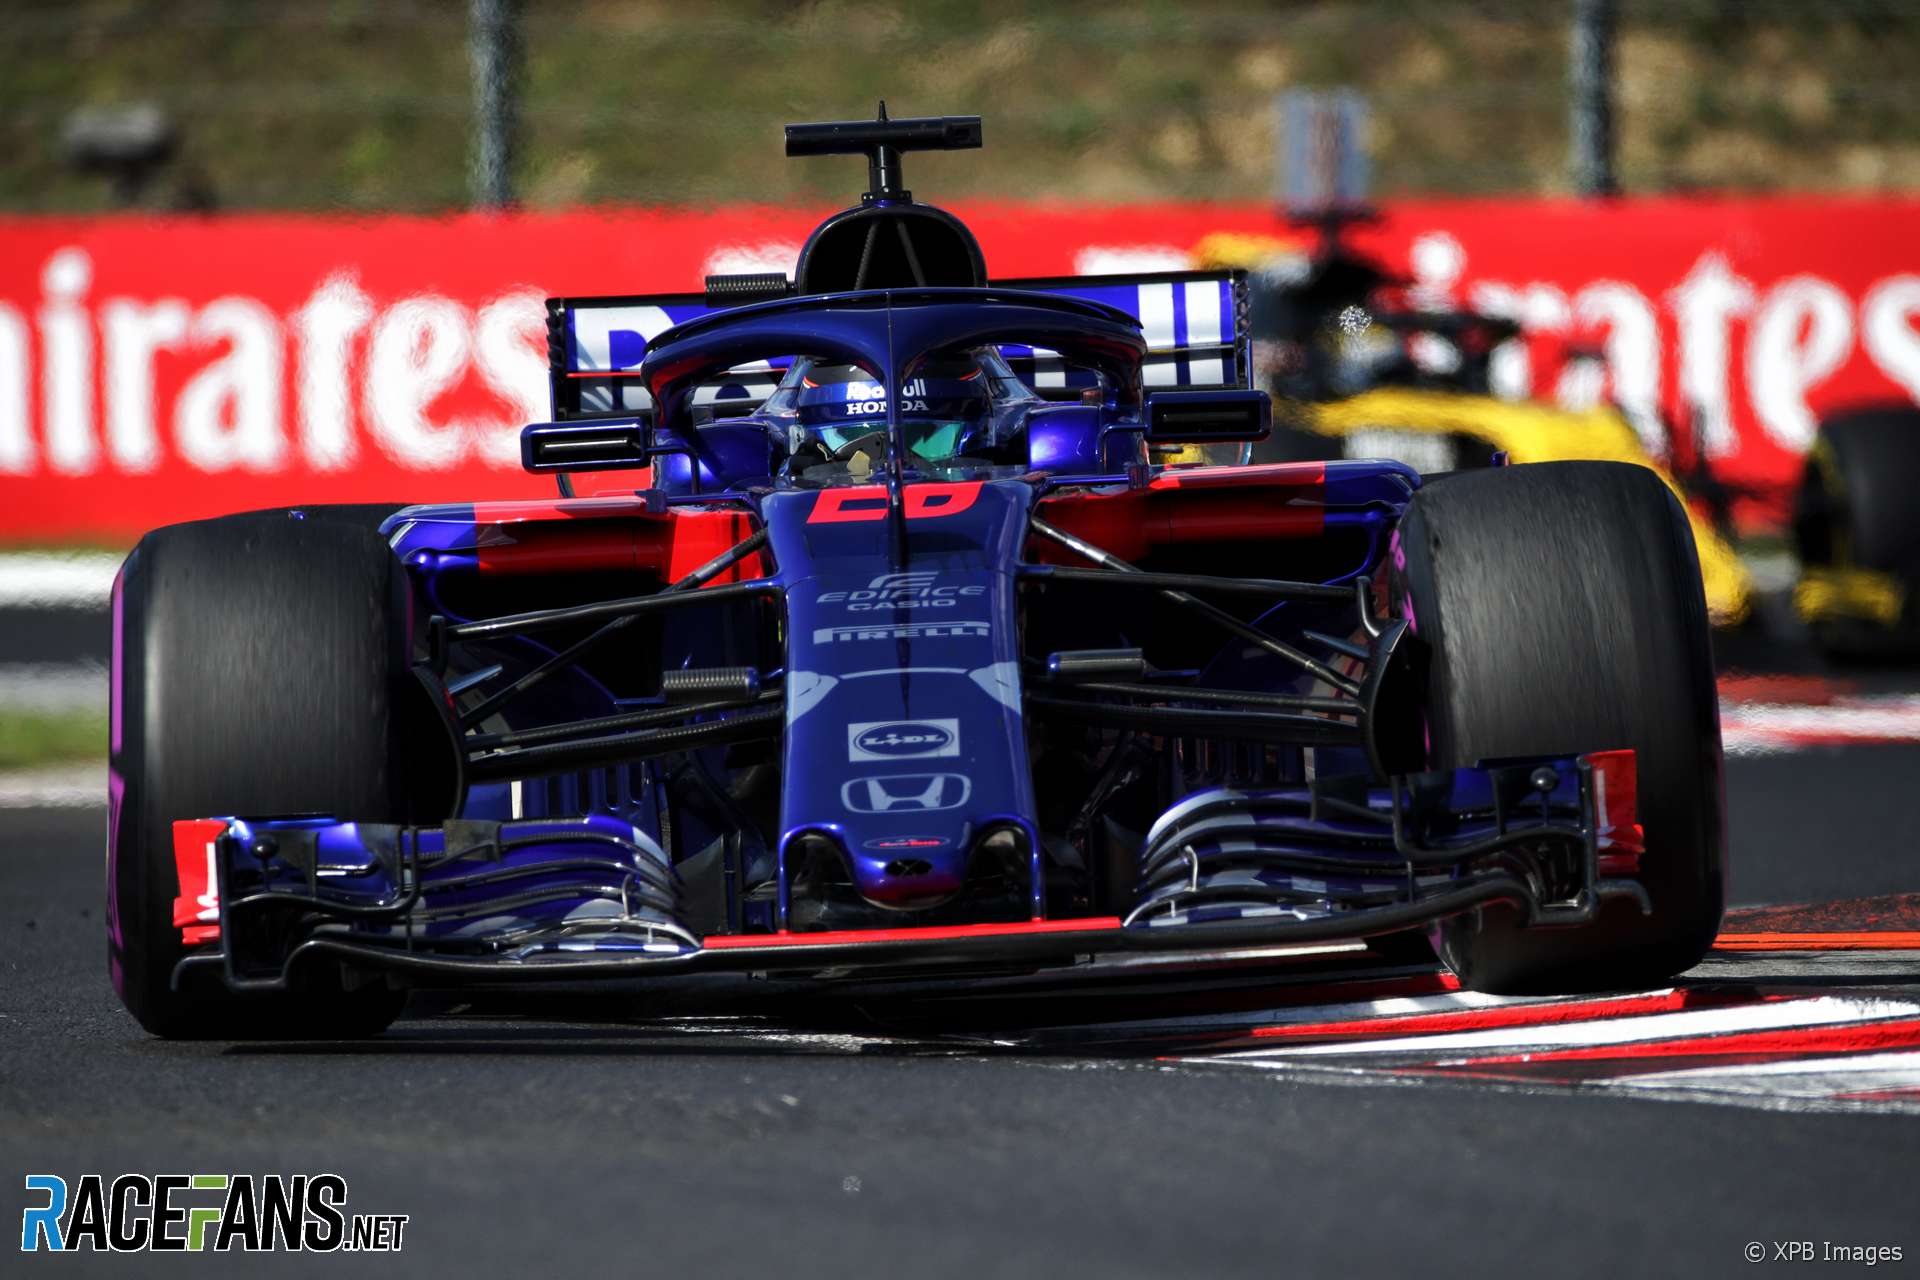 Brendon Hartley, Toro Rosso, Hungaroring, 2018